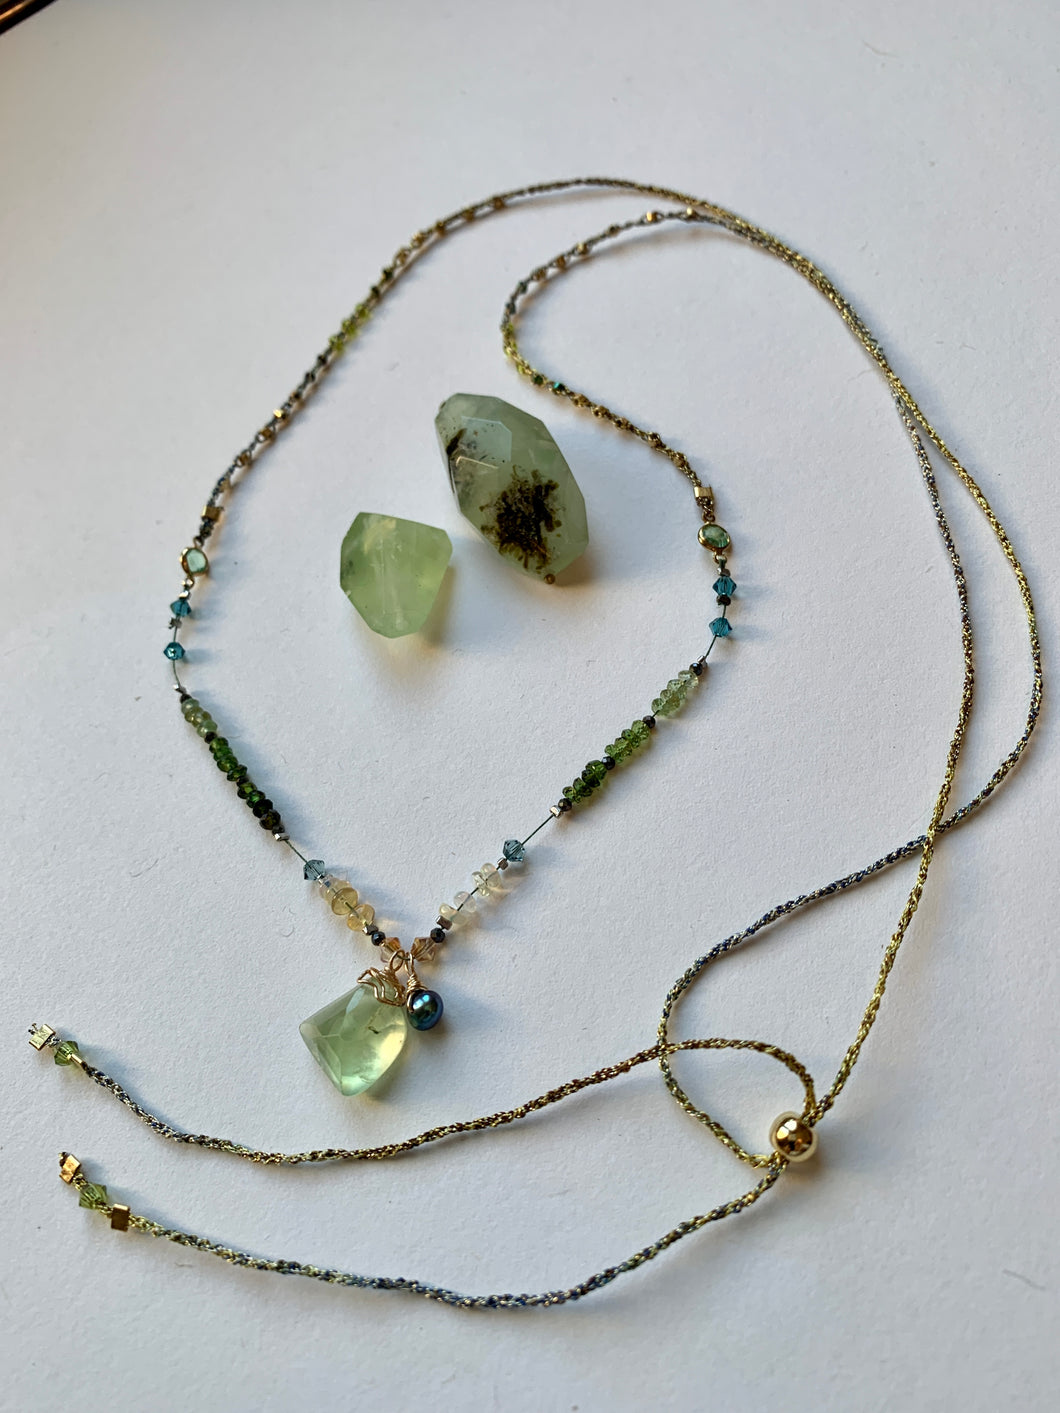 Prehnite Necklace with Green Tourmaline